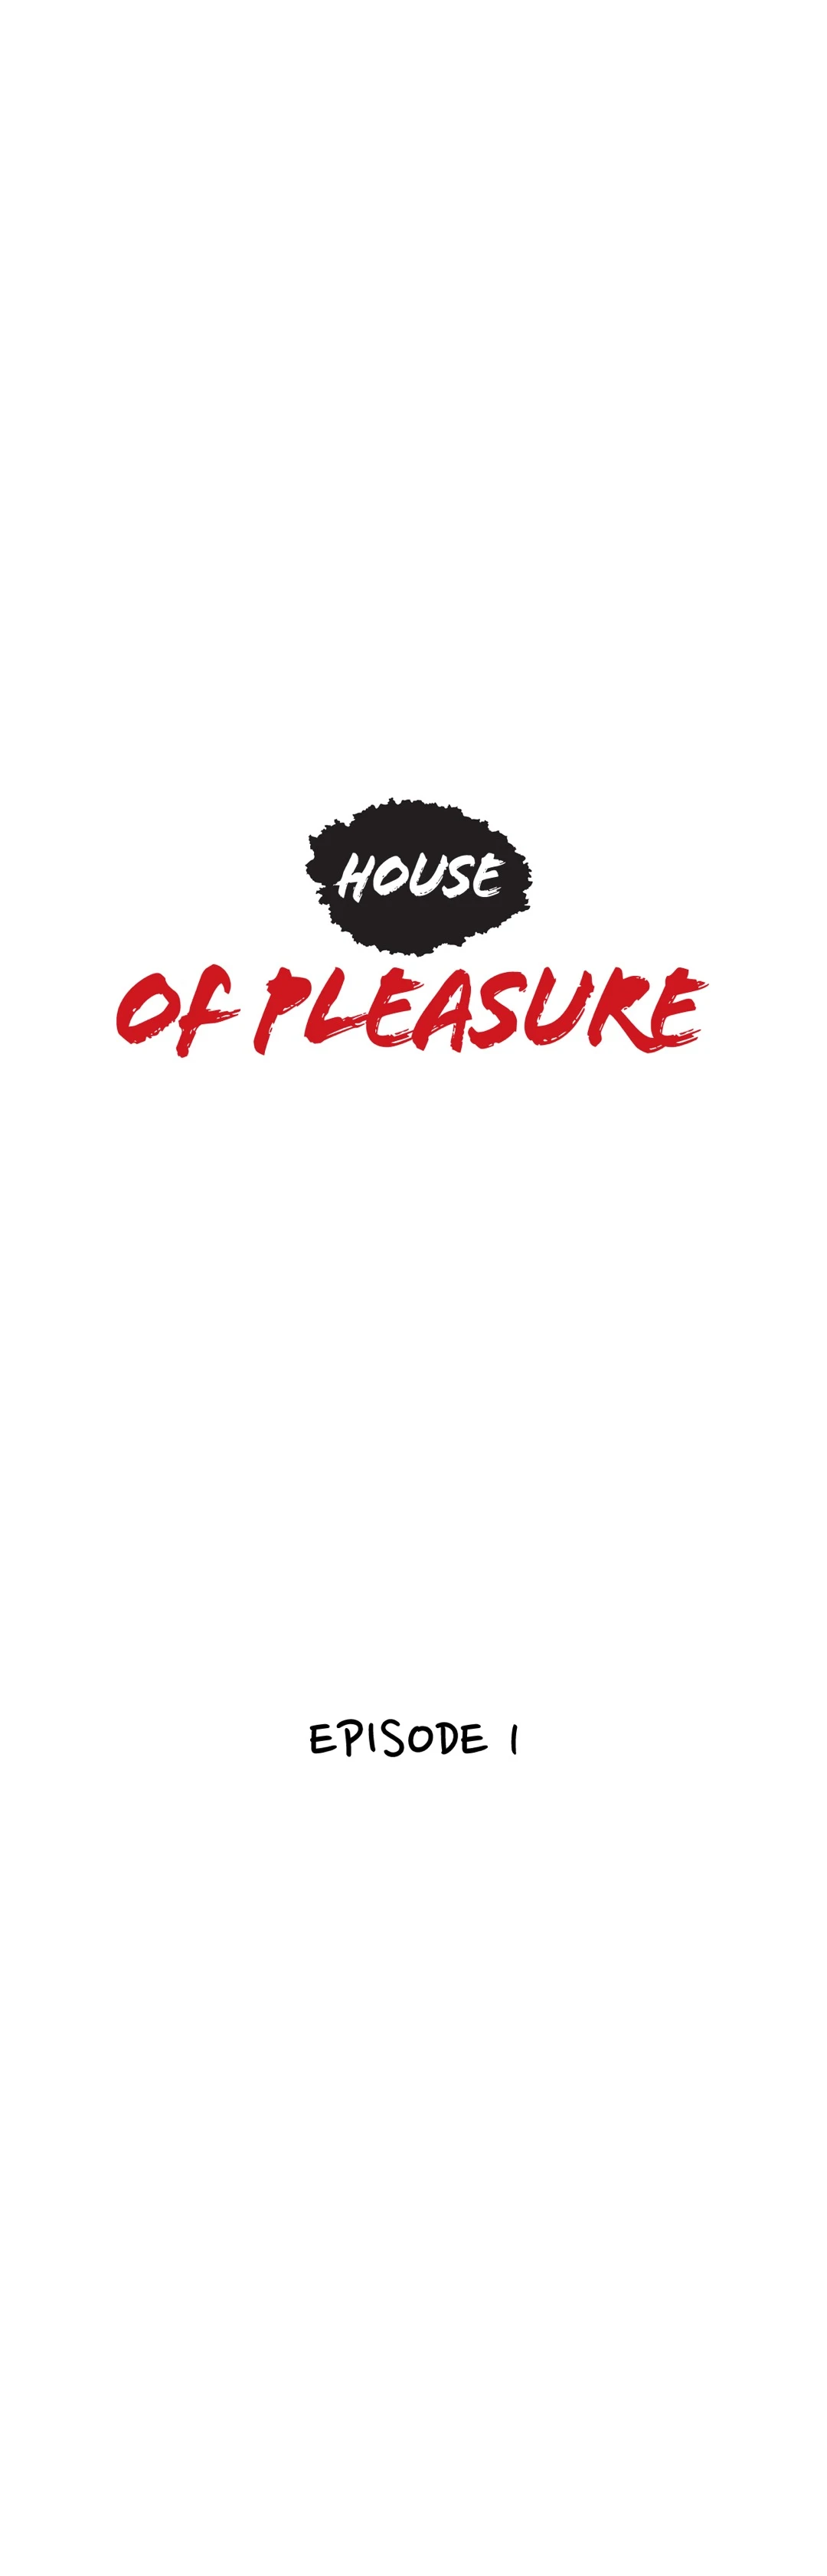 House of Pleasure NEW image